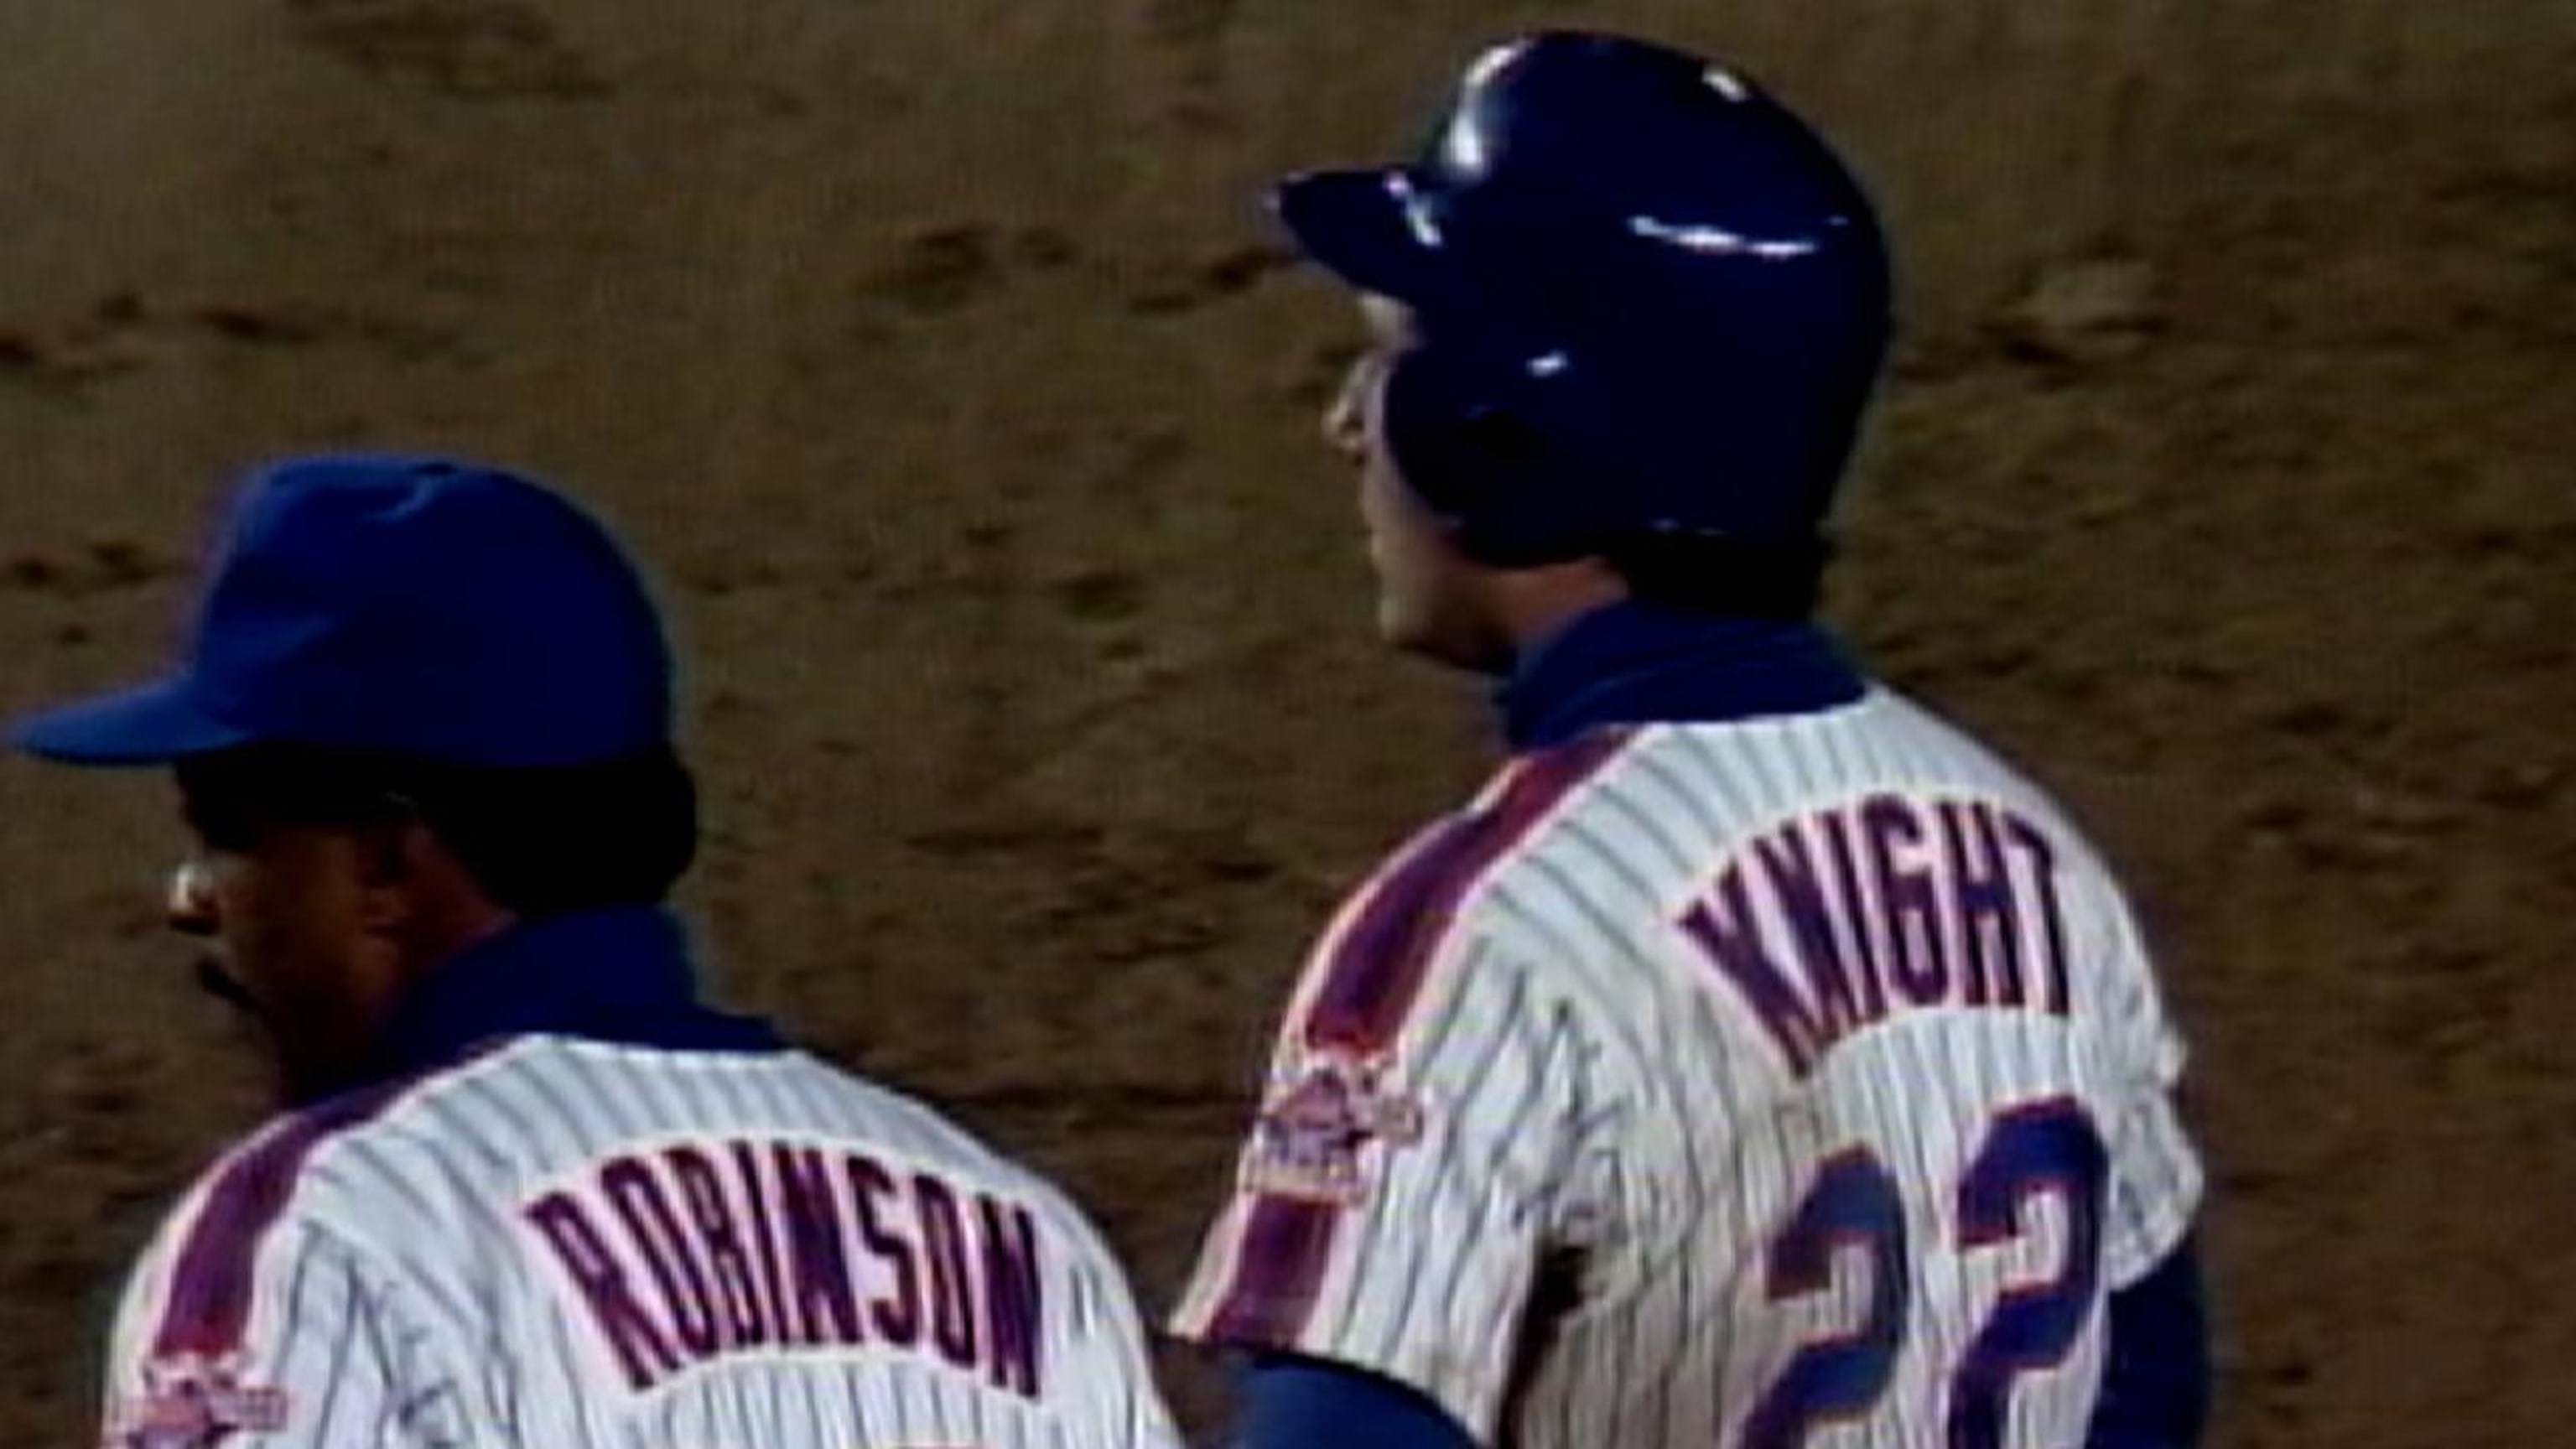 Keith Hernandez on Game 6 1986 World Series